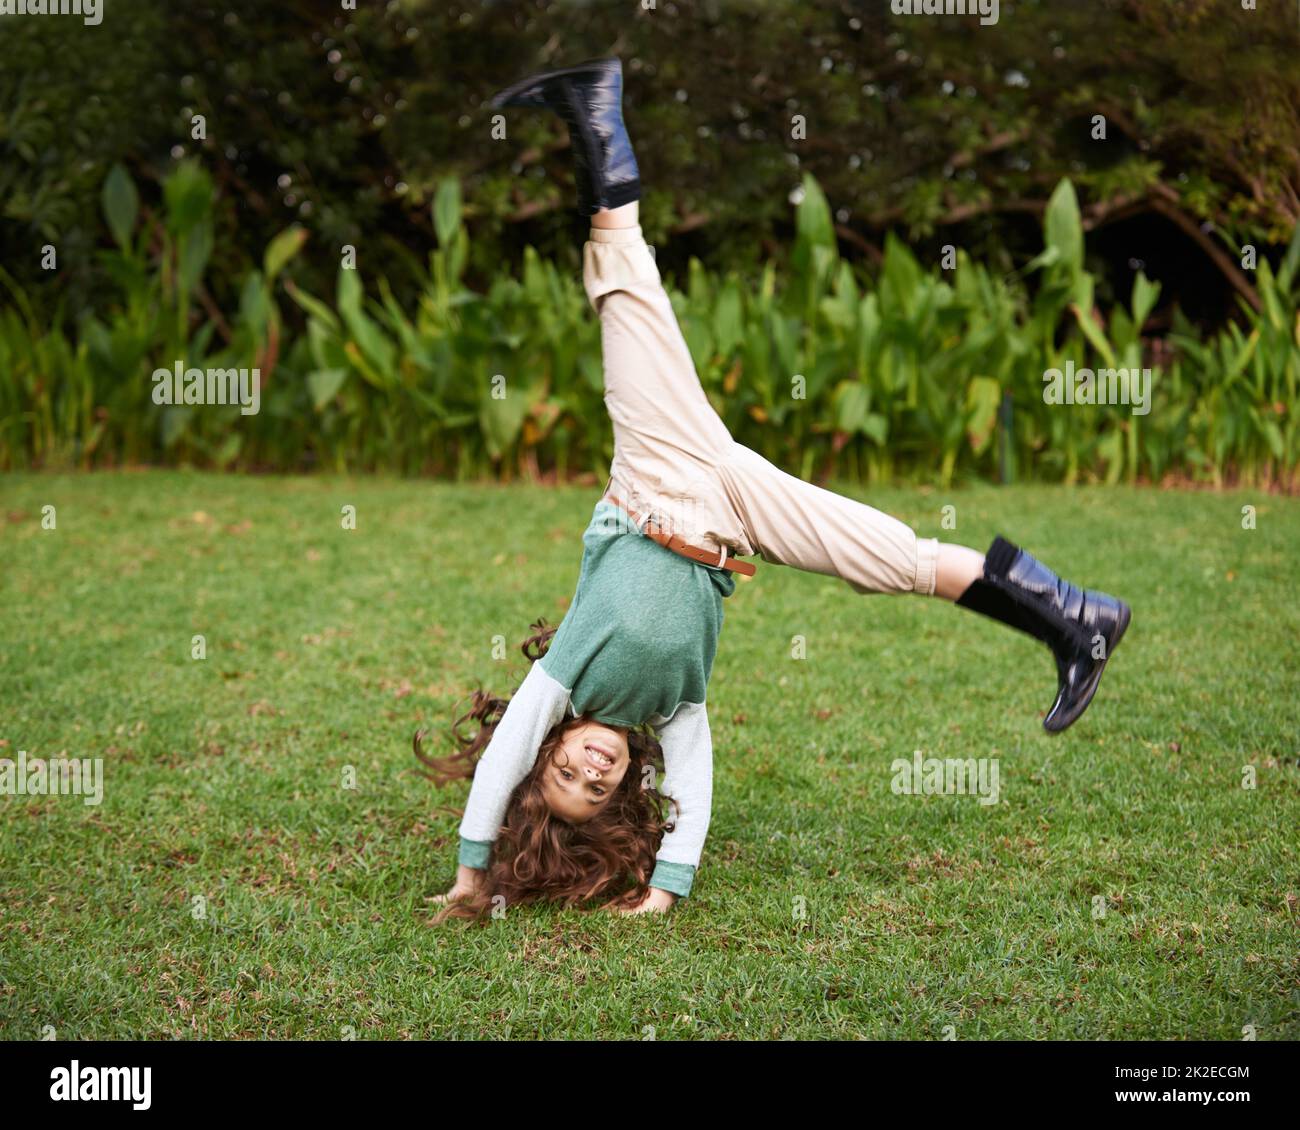 Doing cartwheels is so much fun. Shot of a cute little girl doing cartwheels on the grass. Stock Photo